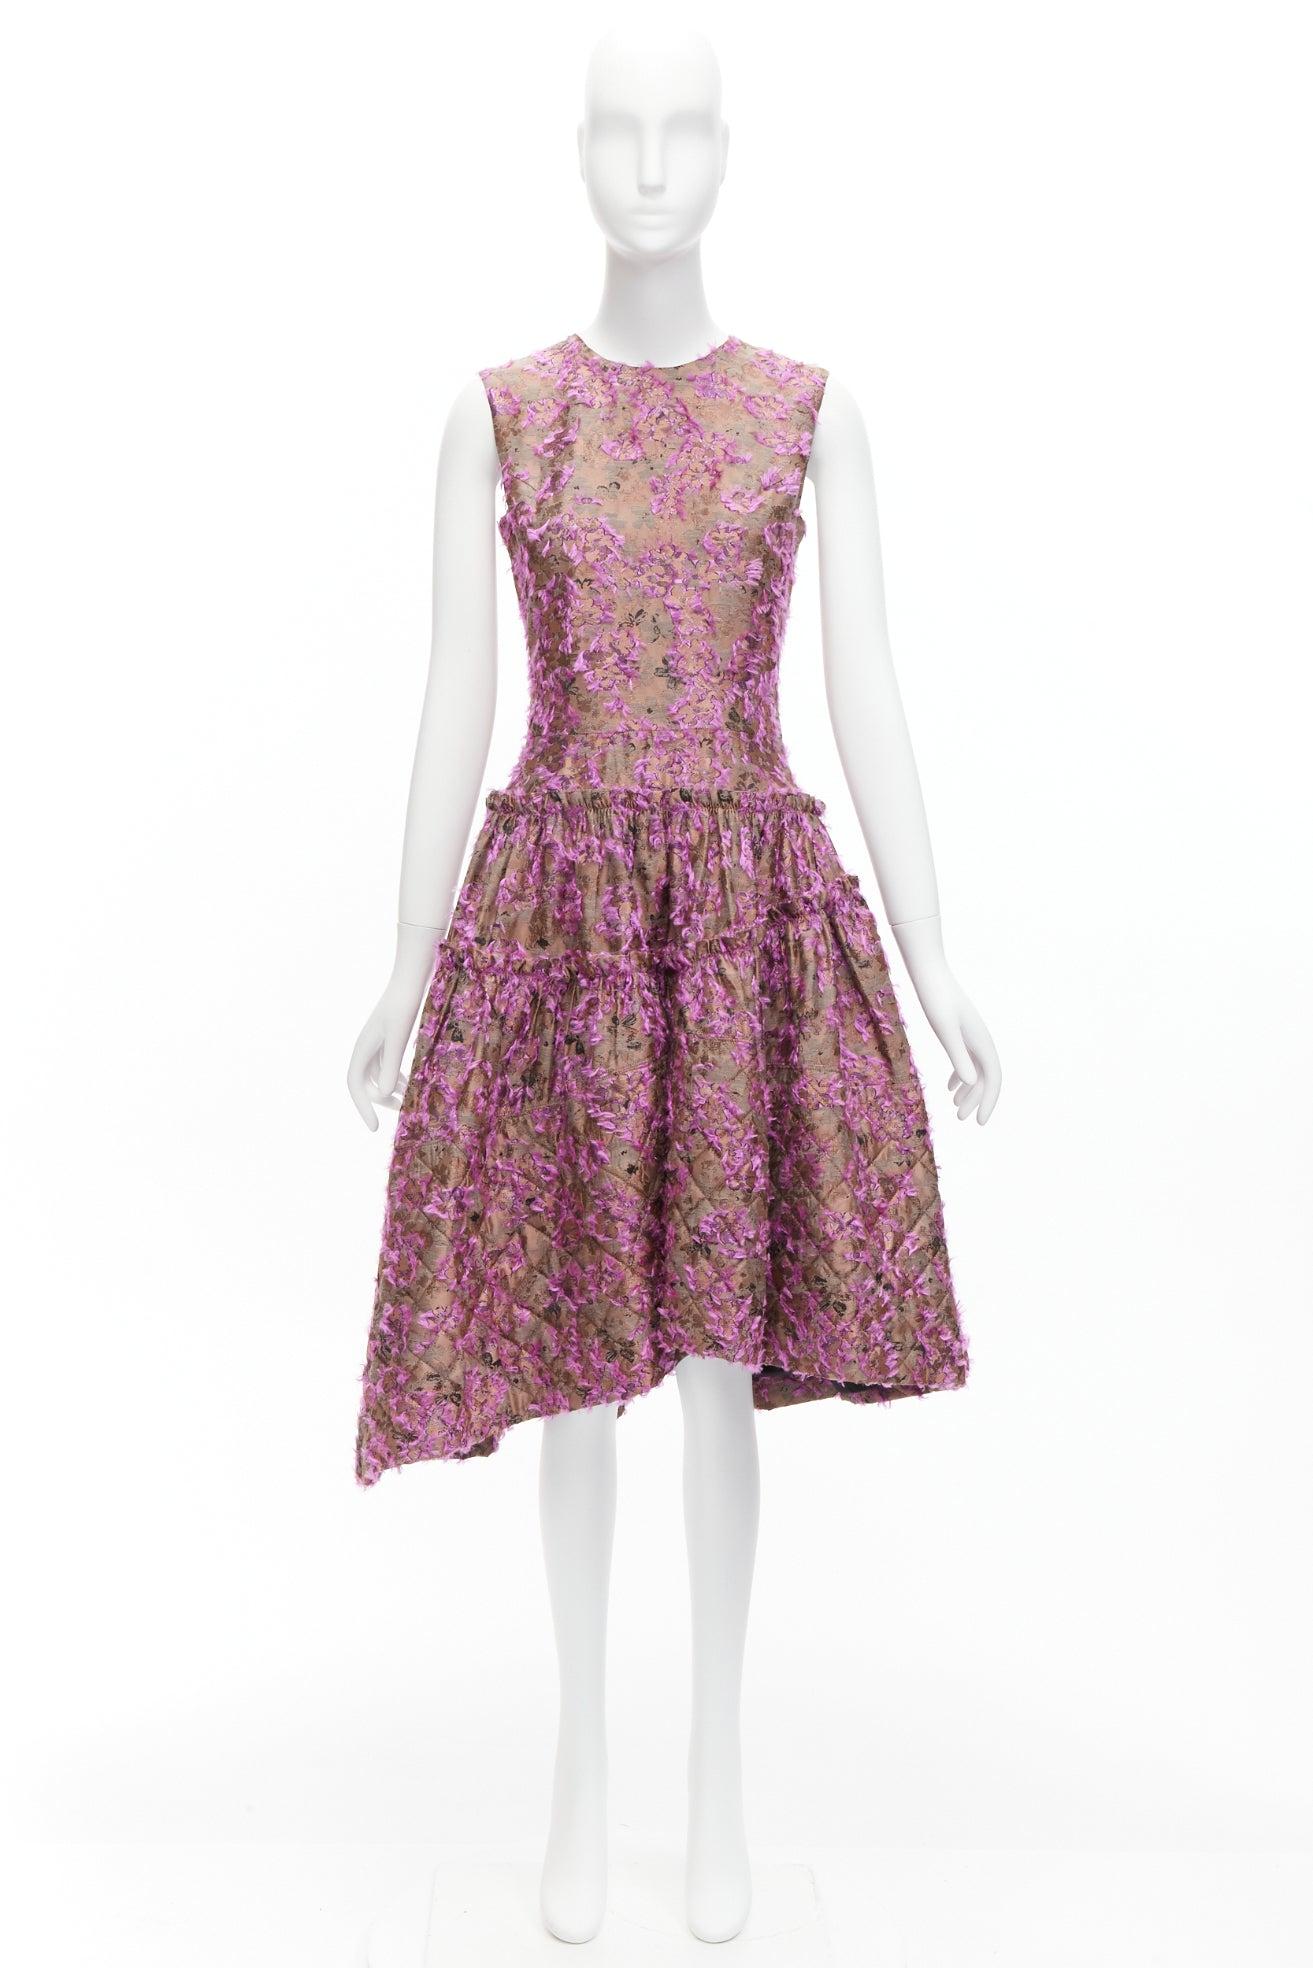 ANAIS JOURDEN brown floral cloque jacquard dropped waist flared dress FR38 M For Sale 5